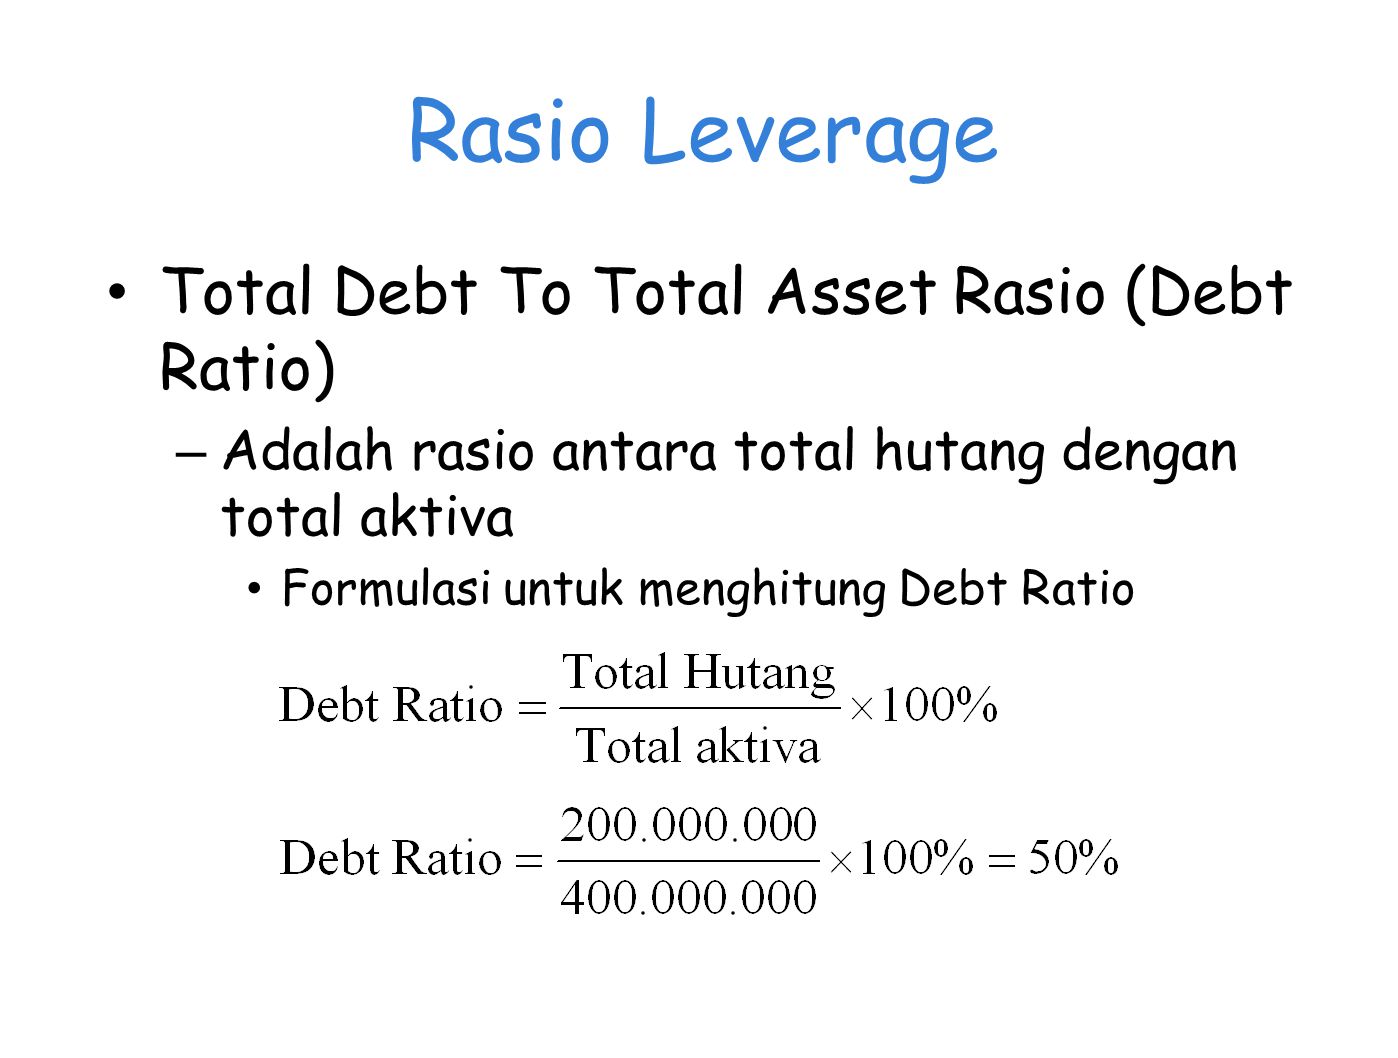 Rasio Leverage Total Debt To Total Asset Rasio (Debt Ratio)